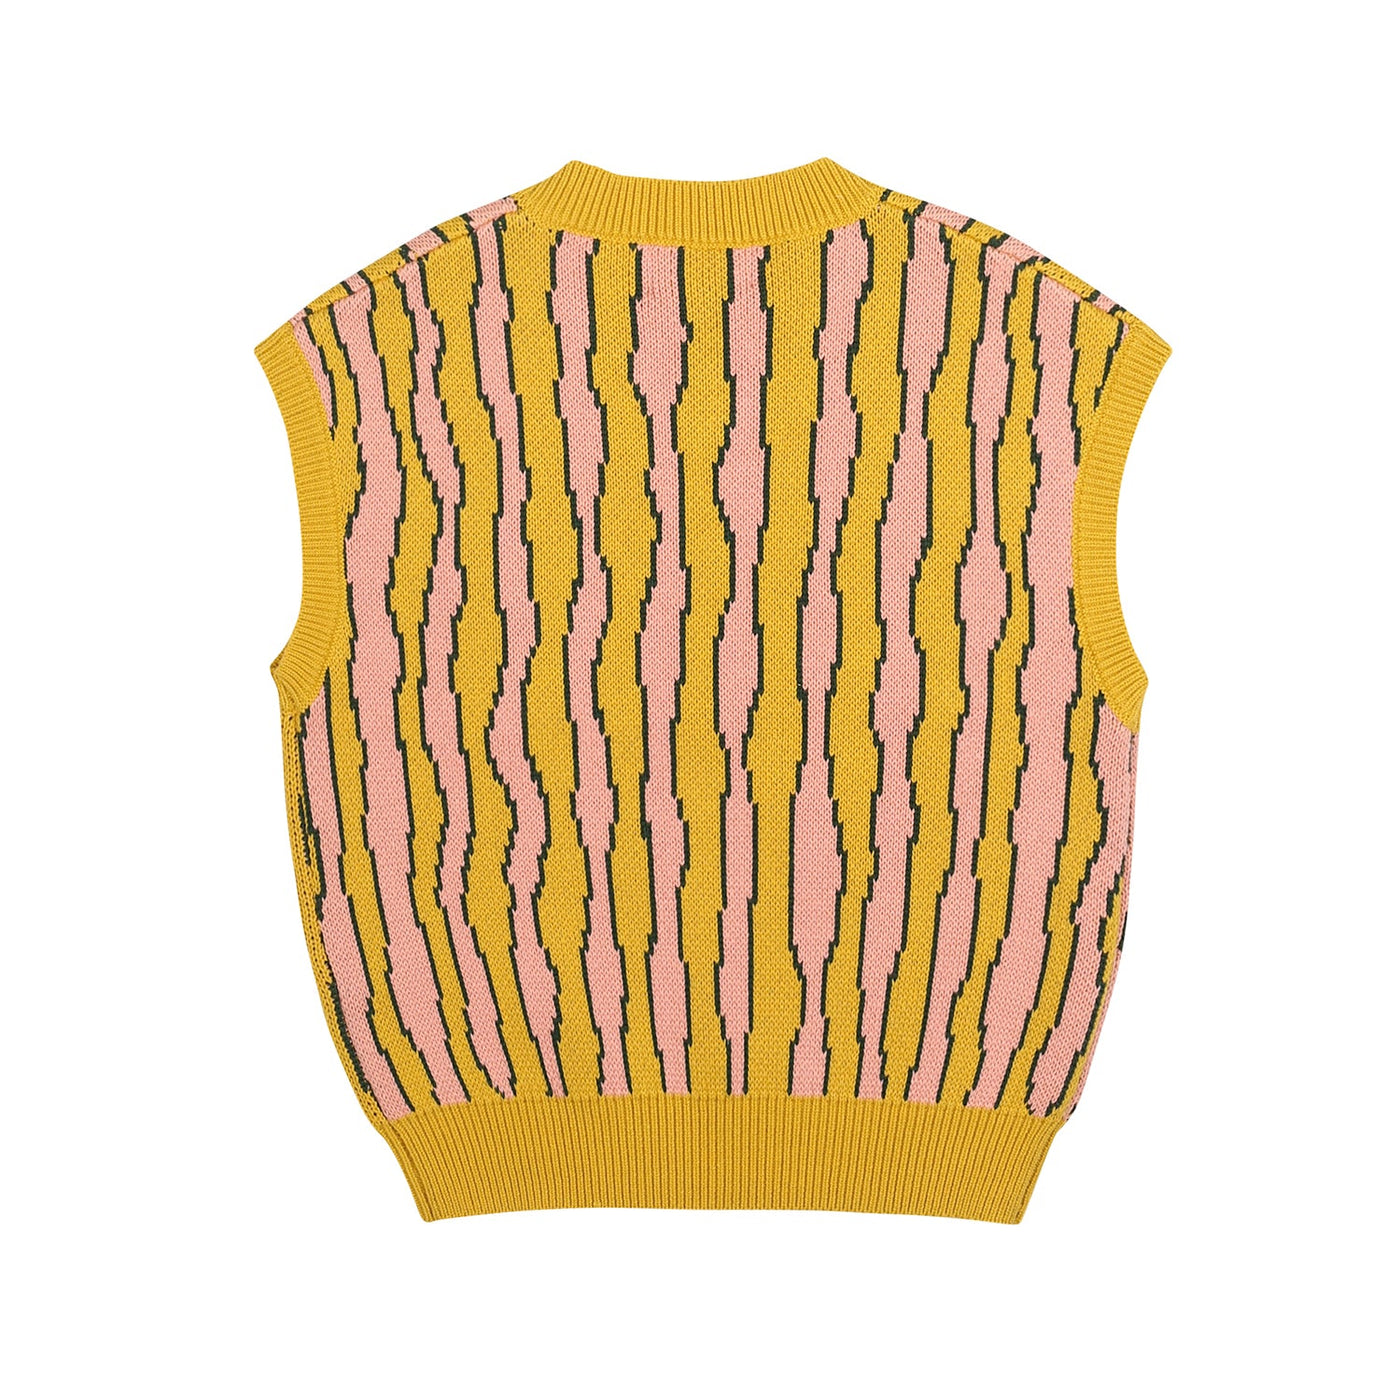 Wave Knit Vest by Jelly Mallow - Petite Belle